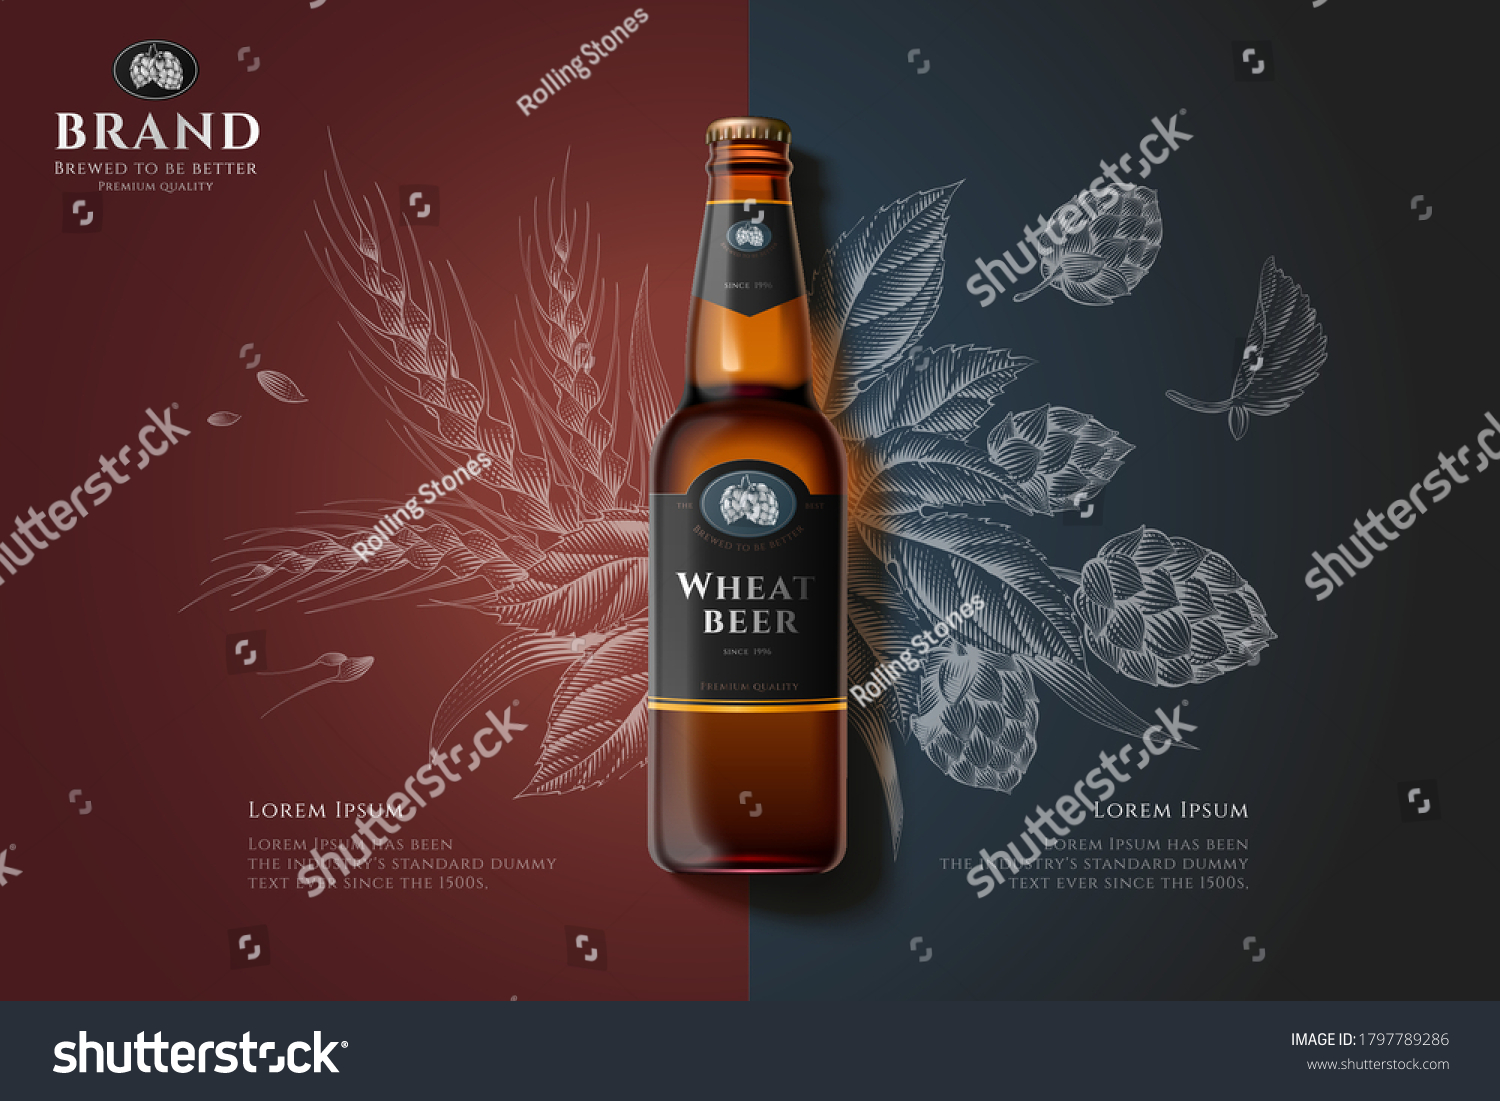 Wheat beer bottle in 3d illustration over malt and hops engraving design on brown and grey background #1797789286